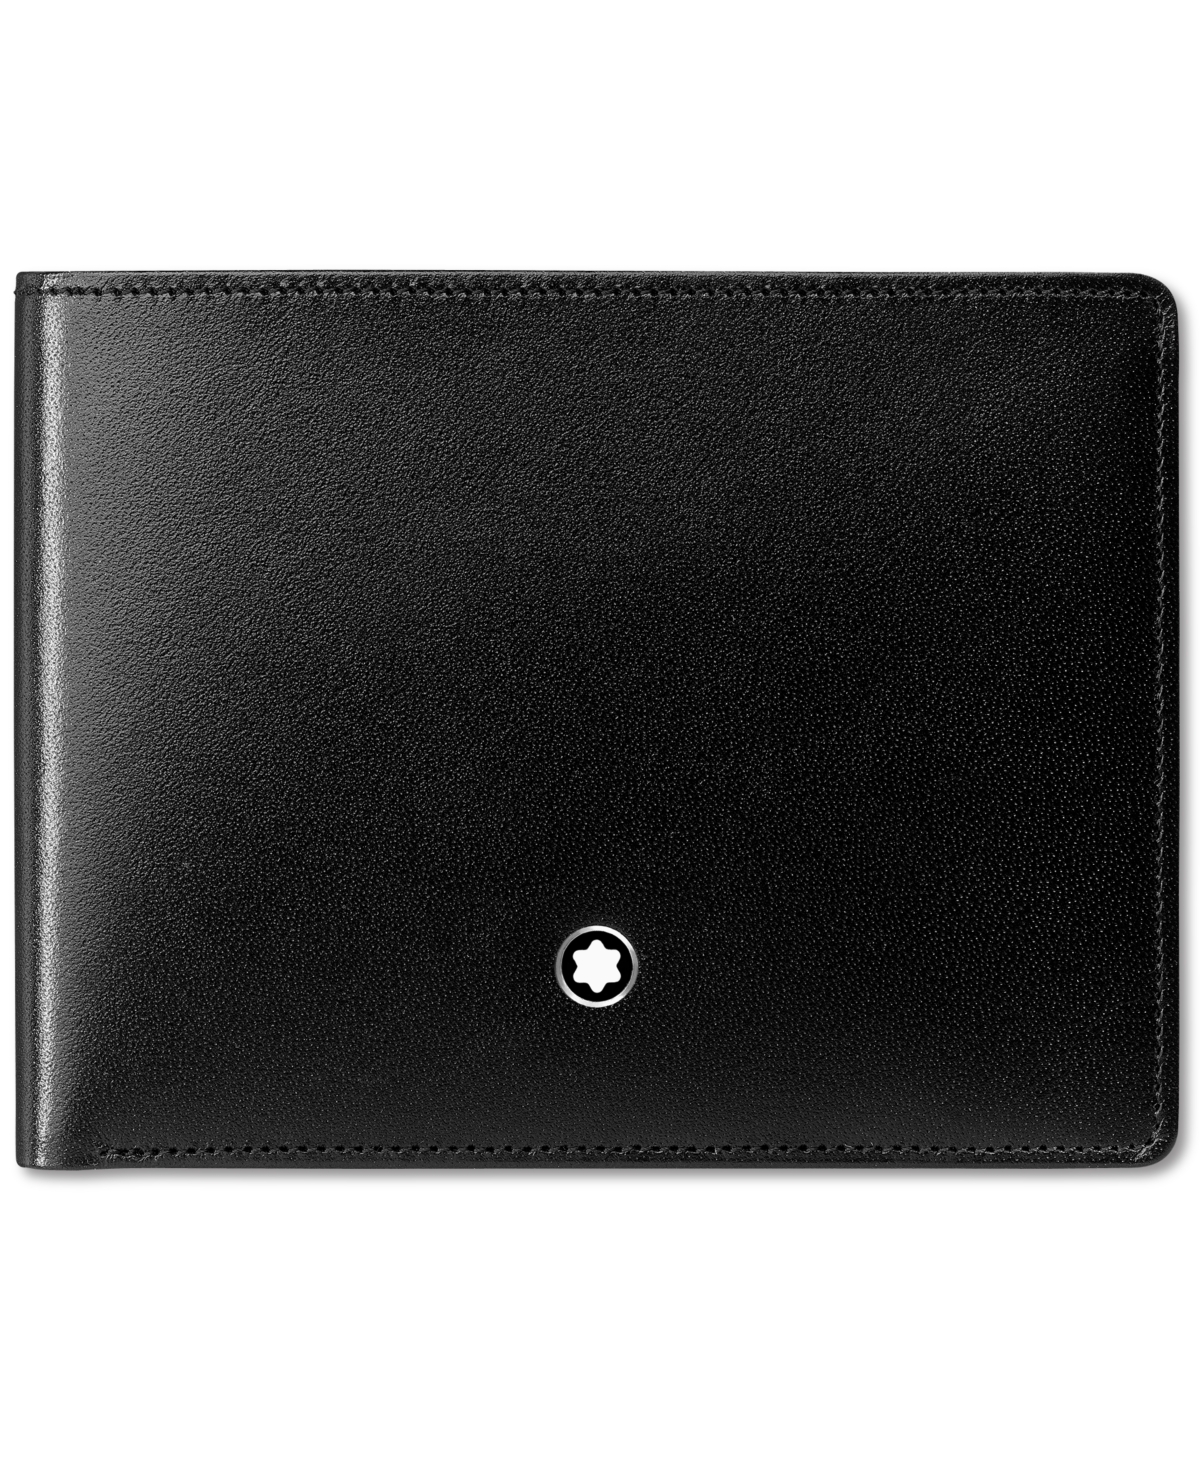 Montblanc Men's Black Leather Meisterstuck Wallet 14548